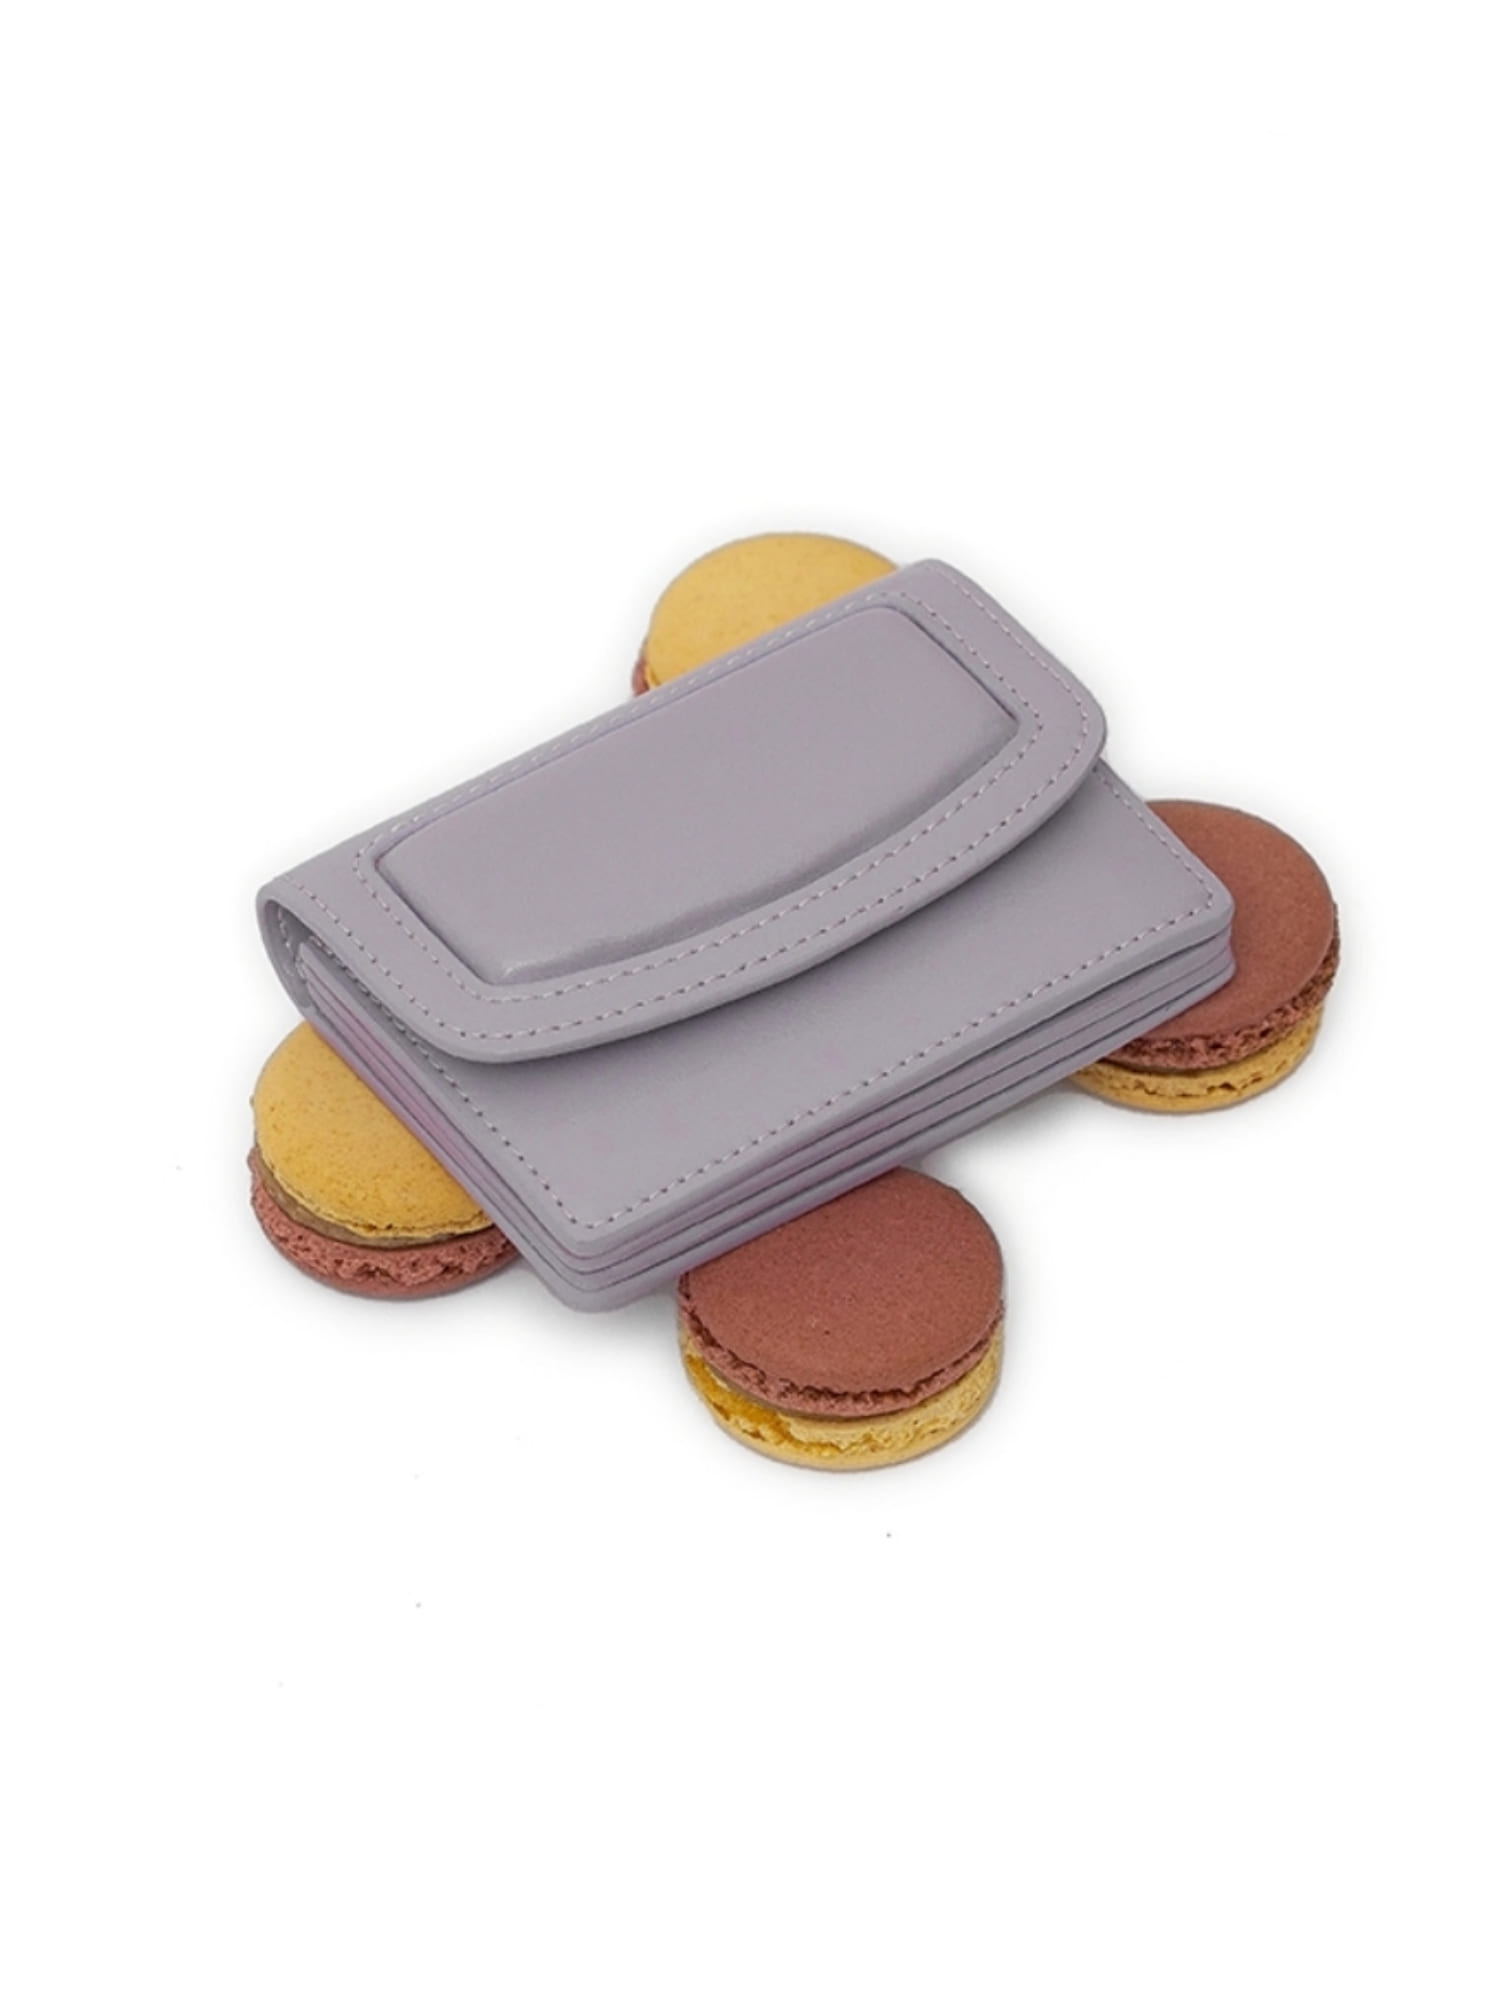 PALETTE Leather Card Case Wallet - Lavender